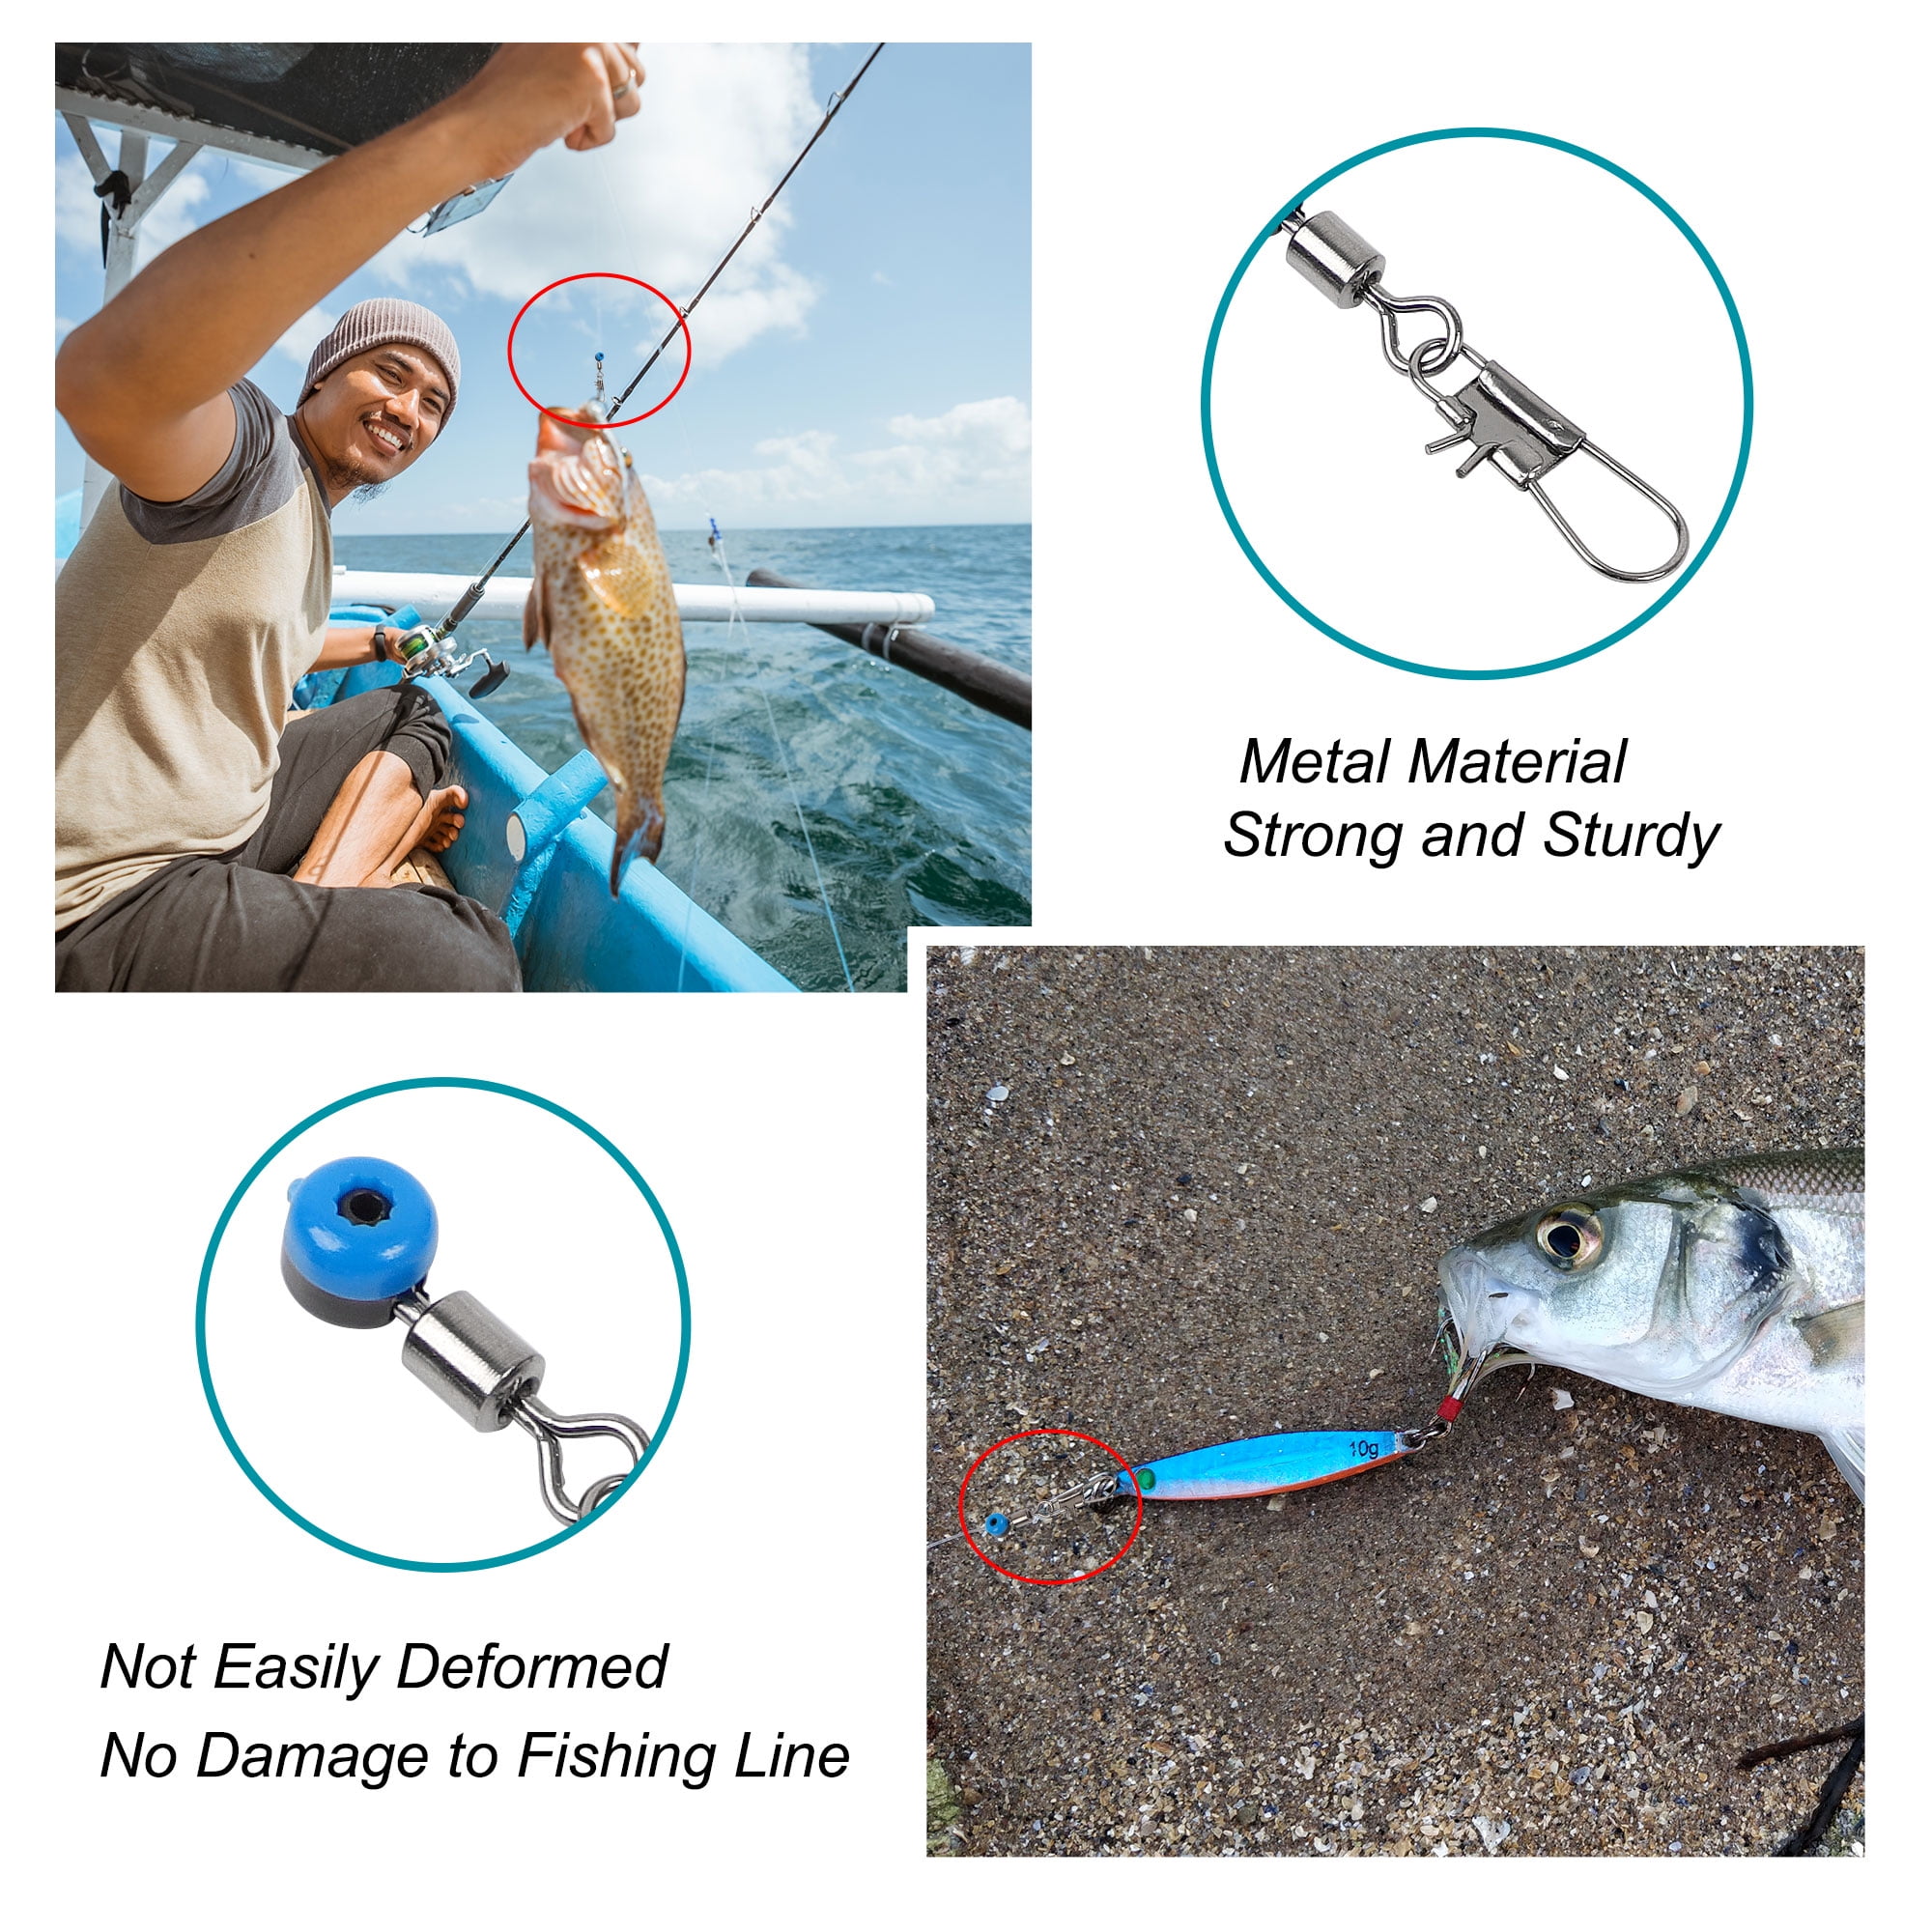 10PCS Fishing Swivels Snap Swivels Barrel Swivels with Interlock Snap, Blue  Plastic Ball Bearing Swivels Fishing Saltwater Freshwater 